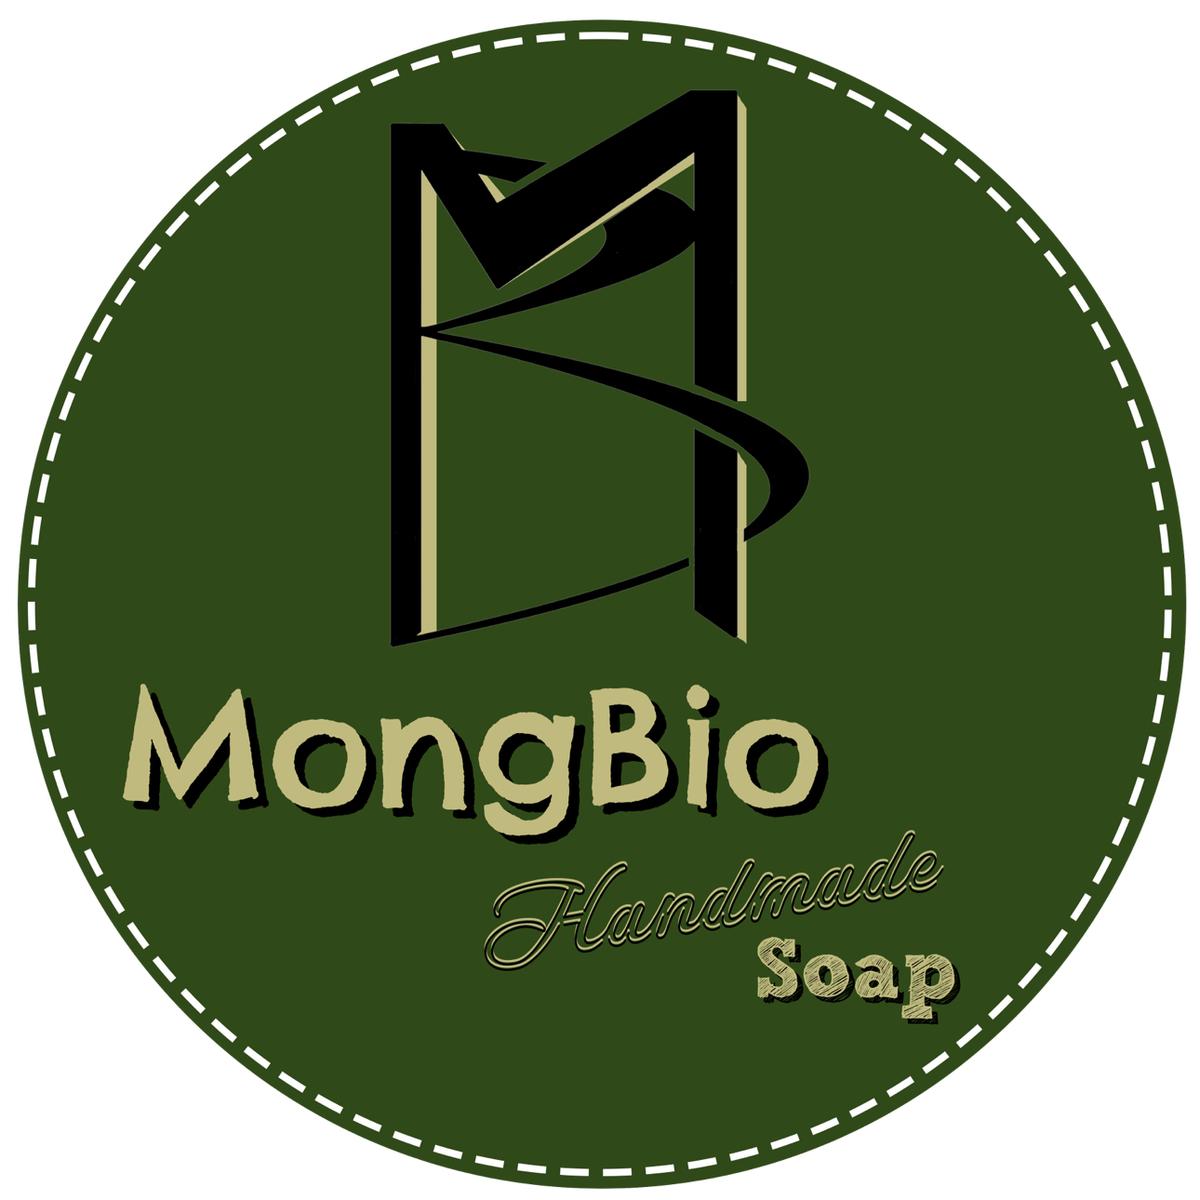 Mongbio.Soap